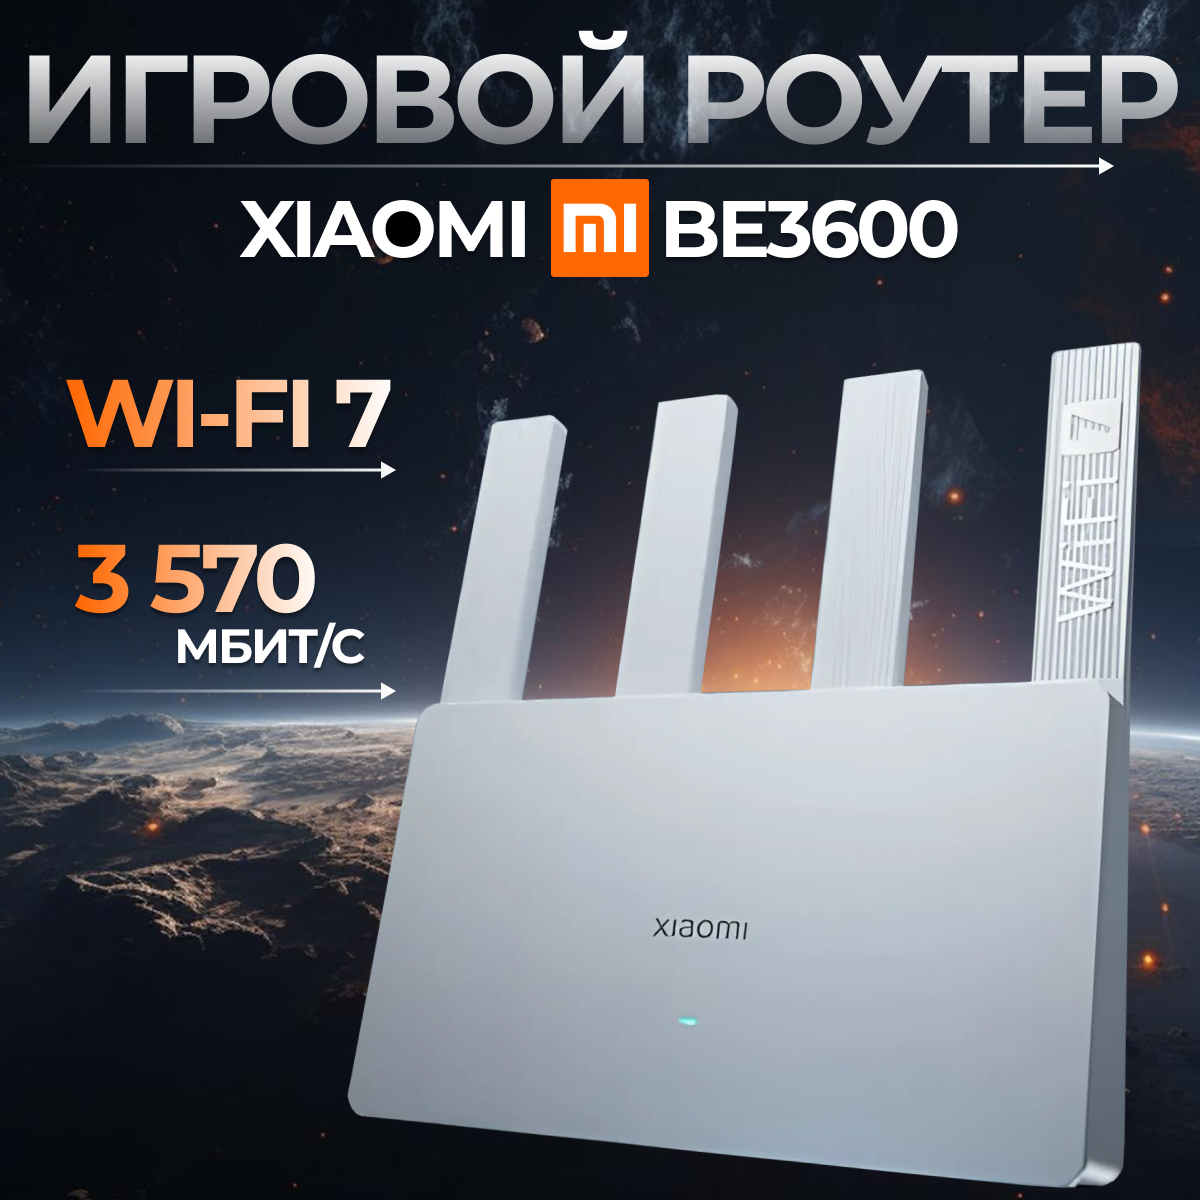 Роутер Xiaomi Mi Router Wi-Fi 7 BE3600 RD15 CN, двухдиапазонный 3570 мбит/с